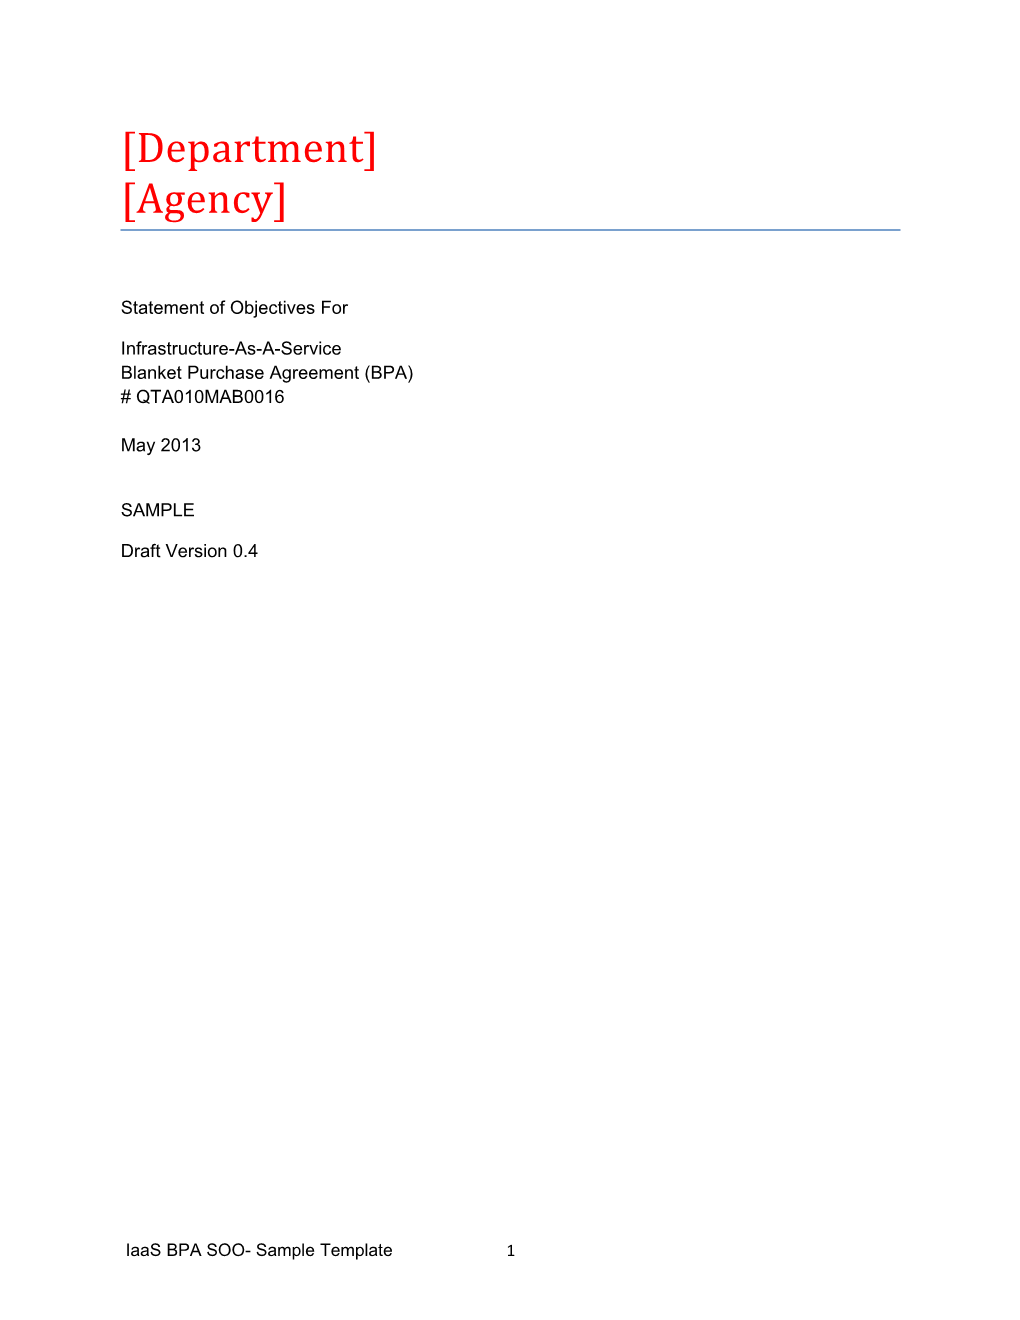 Department Agency